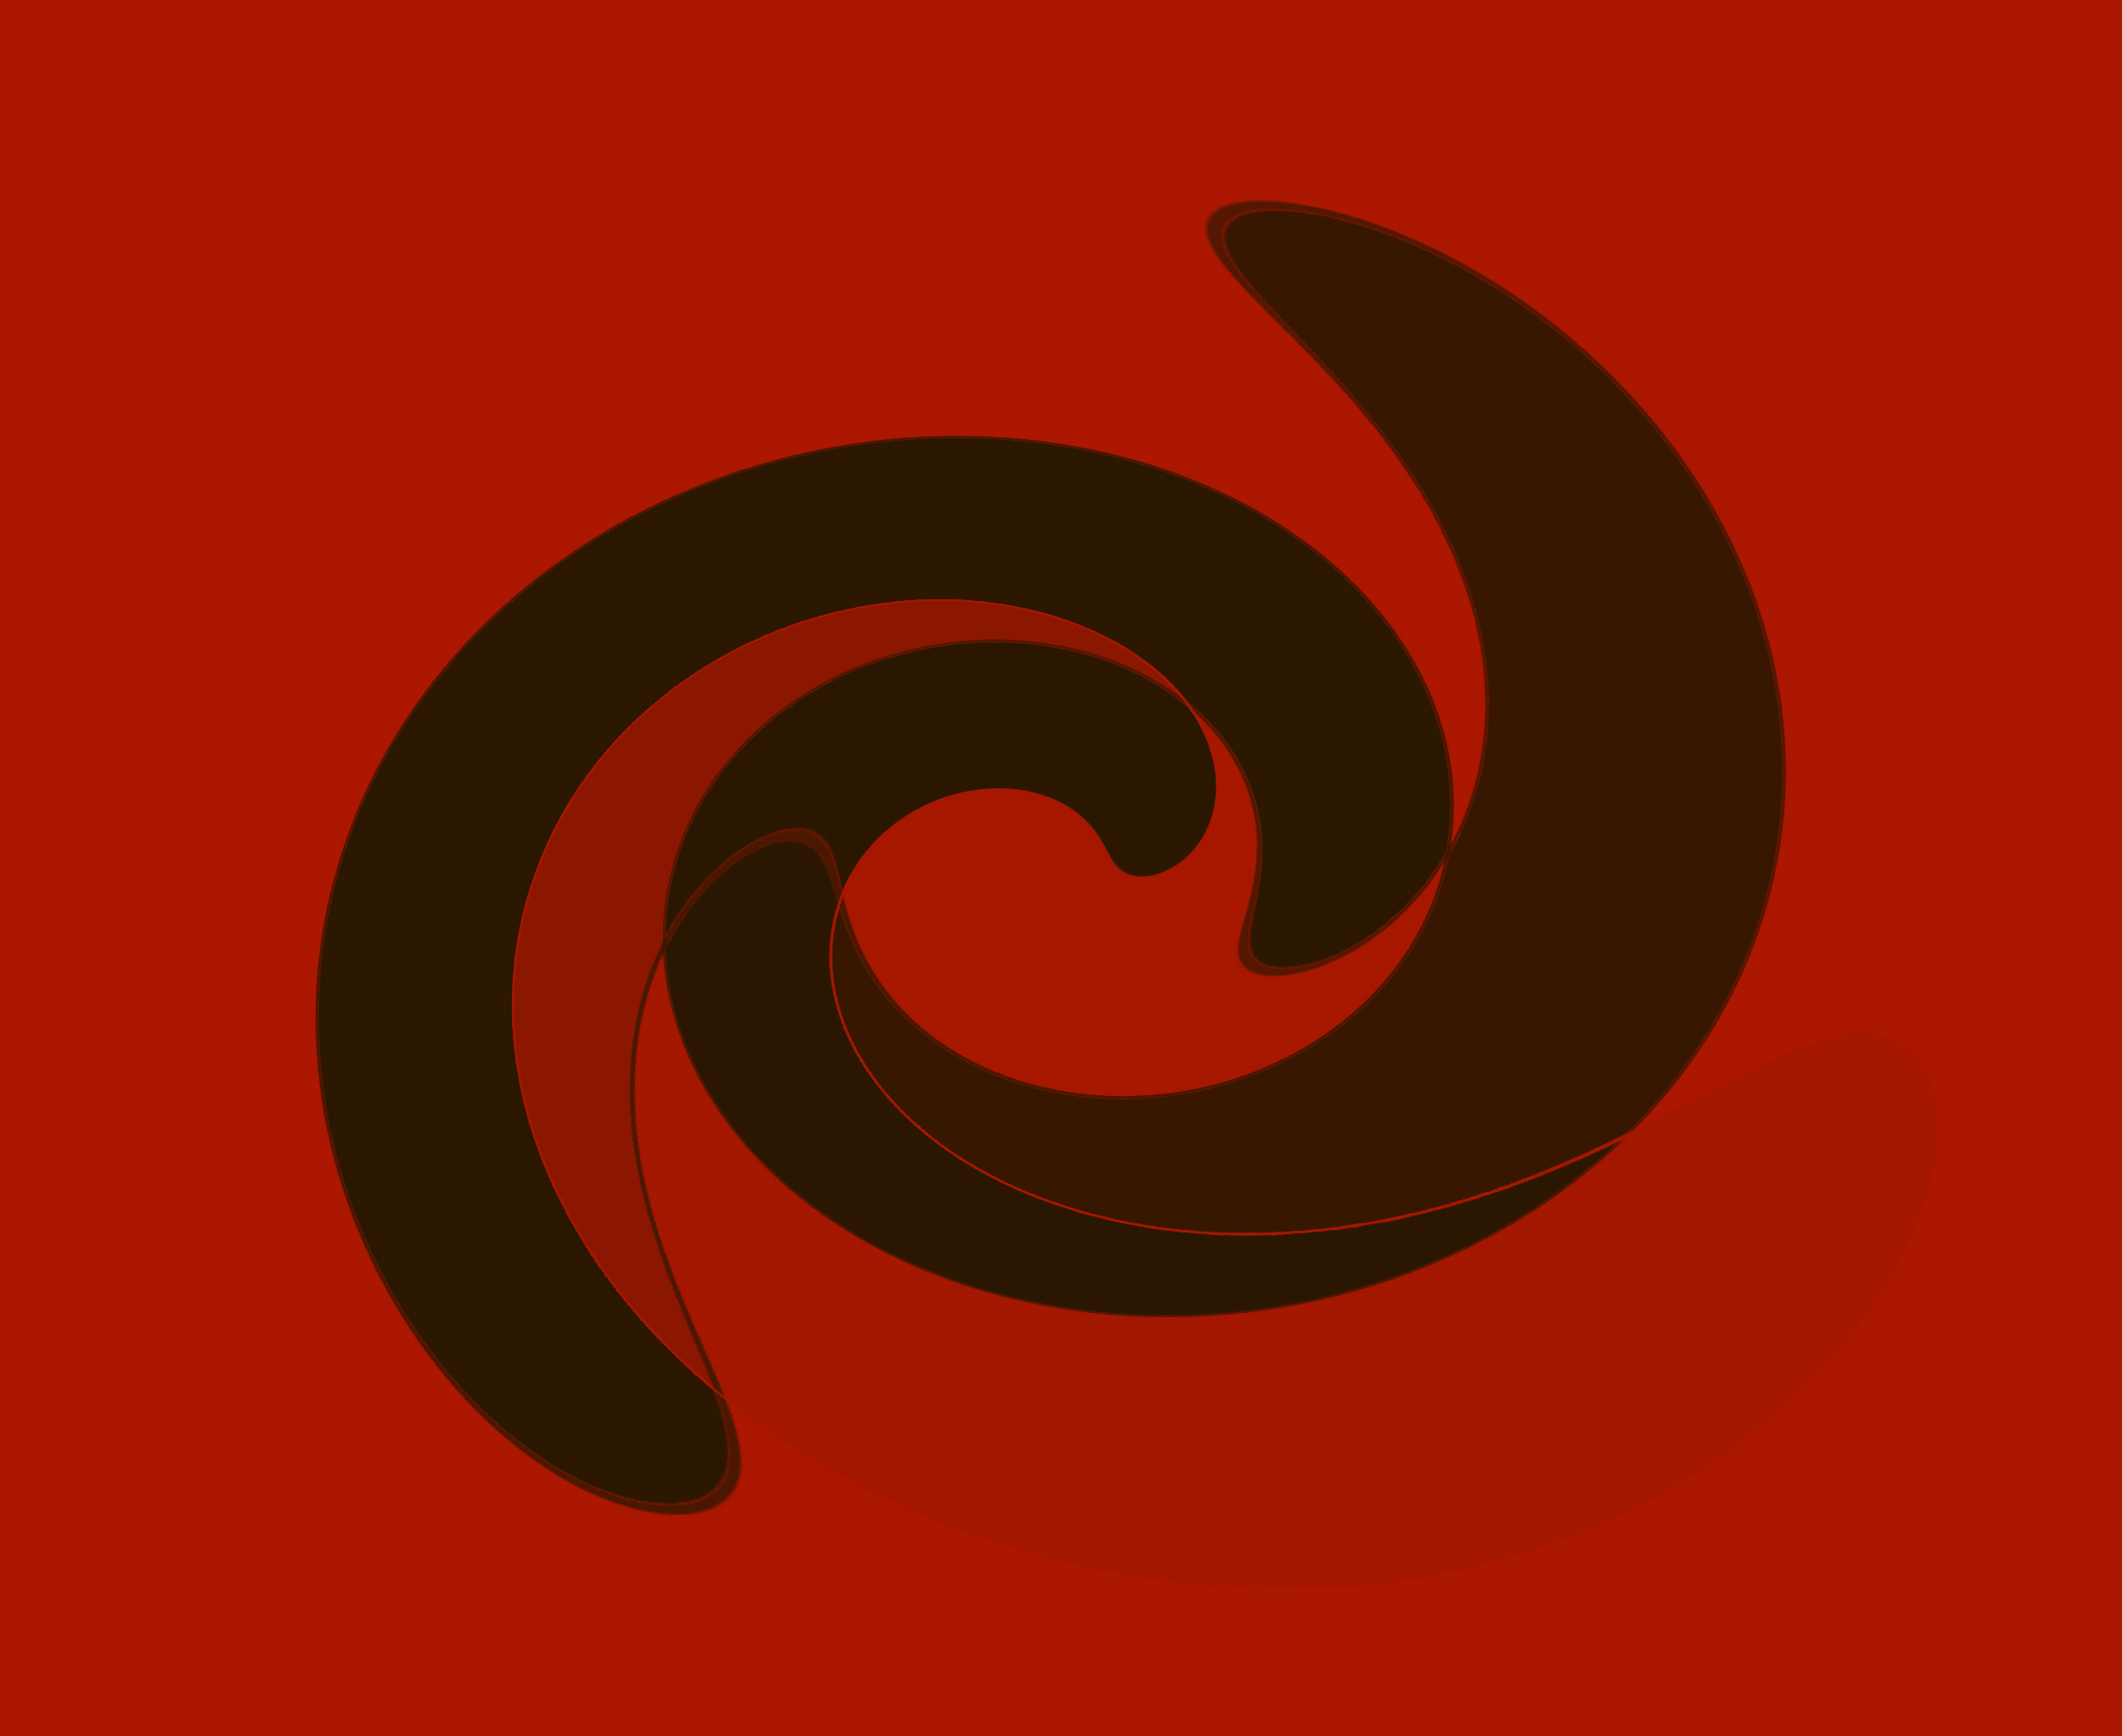 Spiral design in red. March 2019.